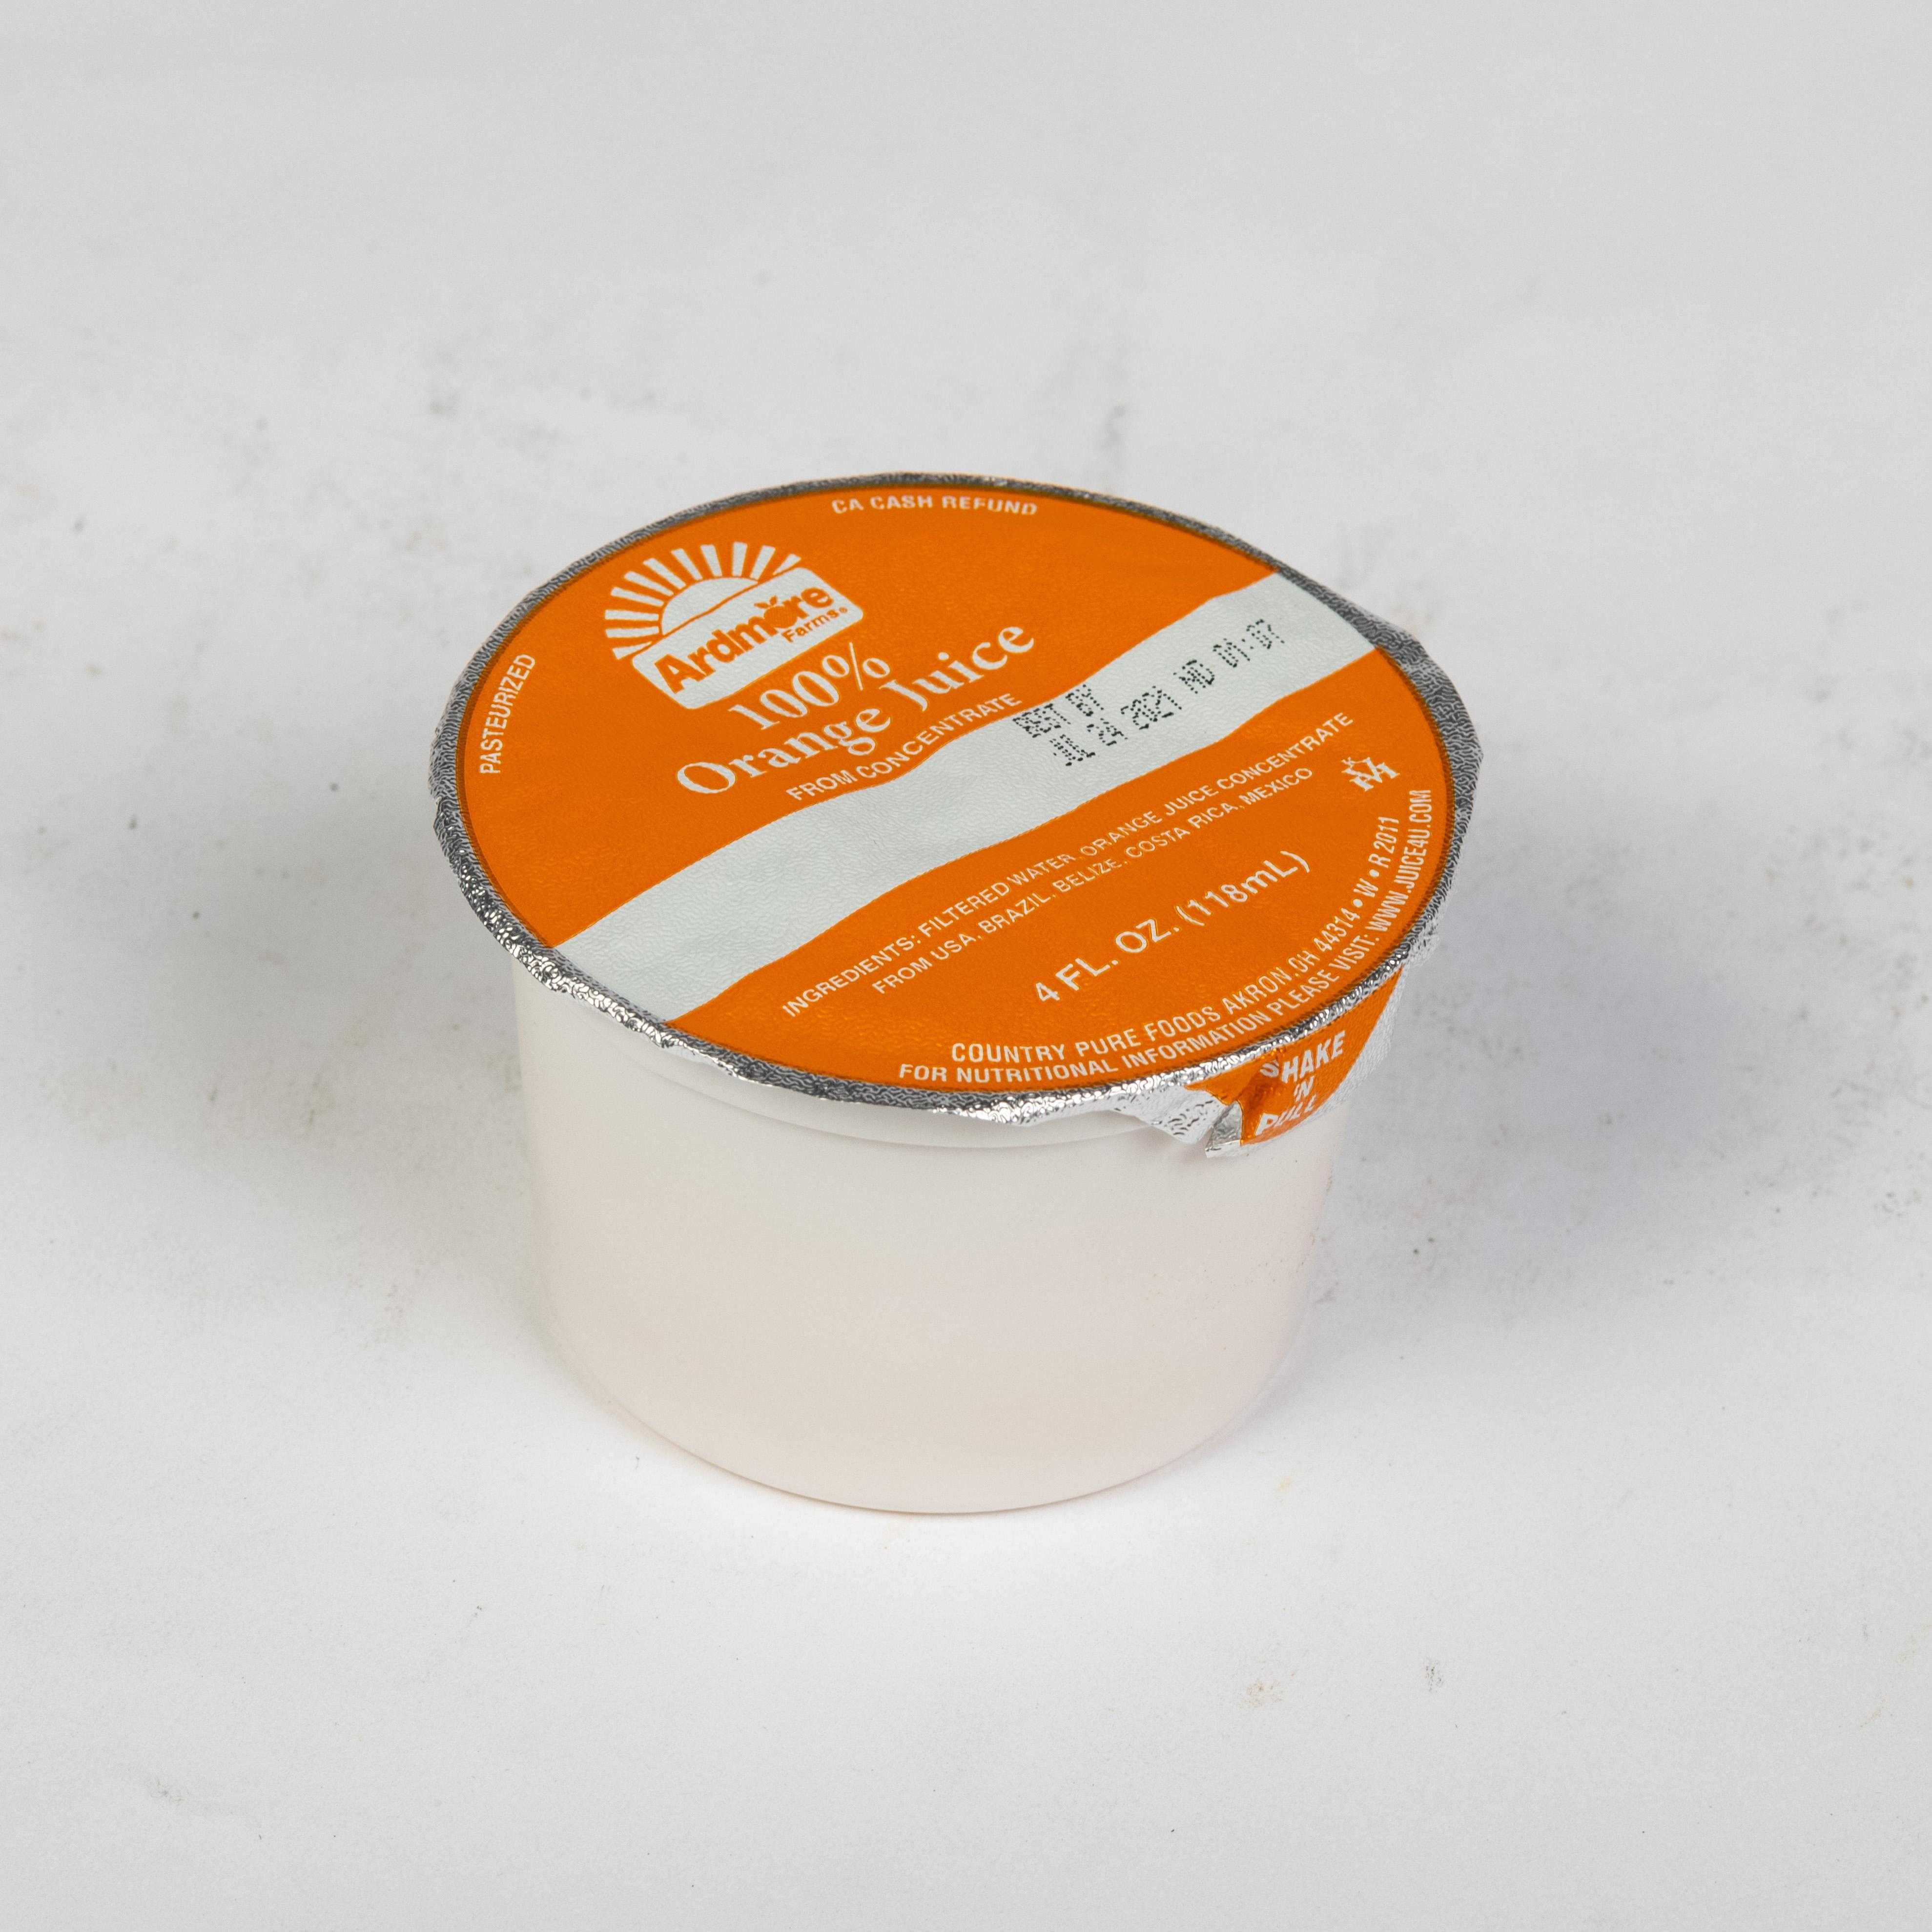 Ardmore Farms Orange Juice Frozen Carton - Country Pure